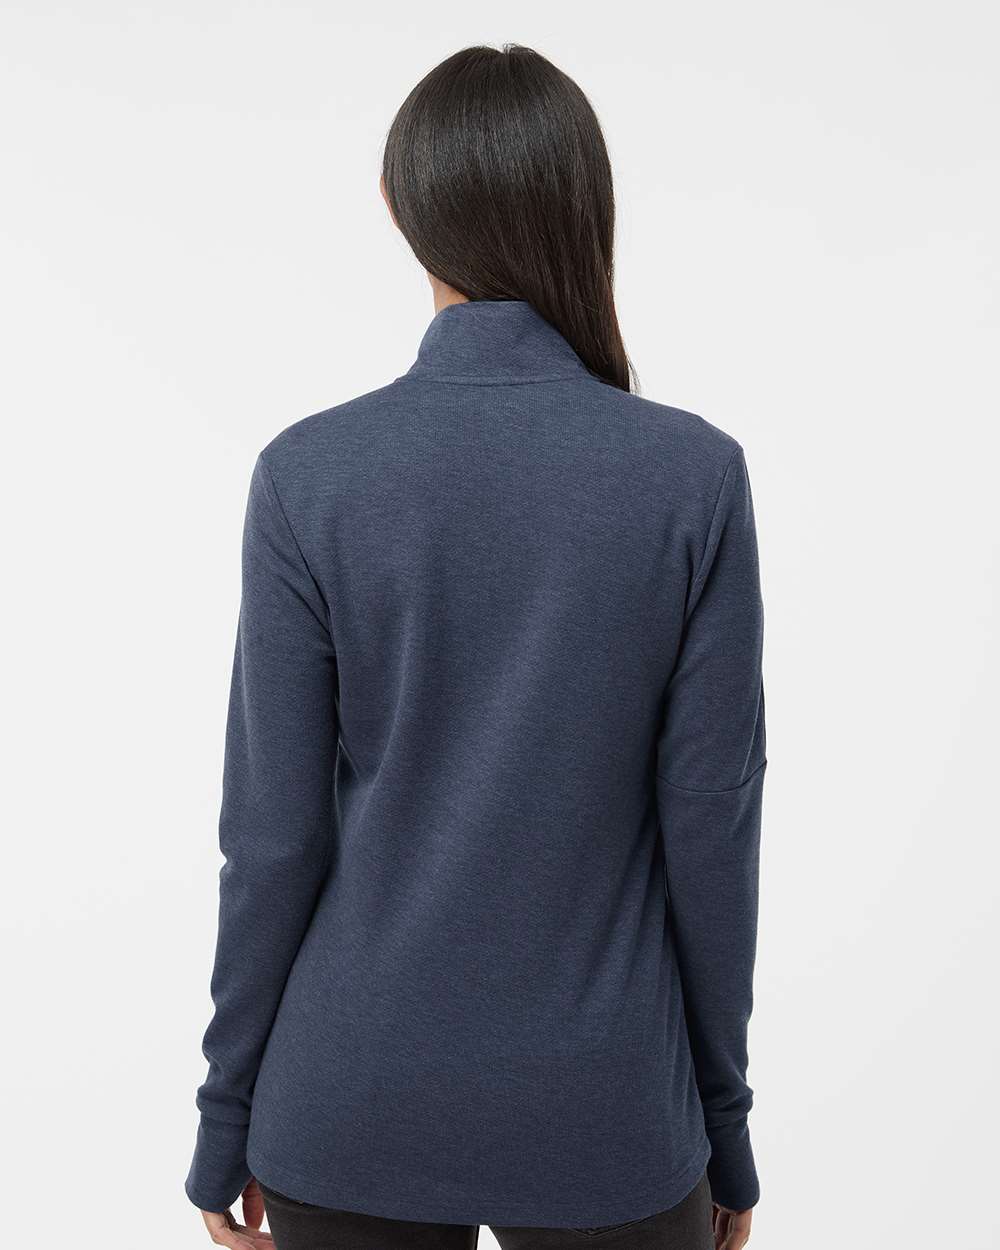 Adidas A555 Women's 3-Stripes Quarter-Zip Sweater #colormdl_Collegiate Navy Melange